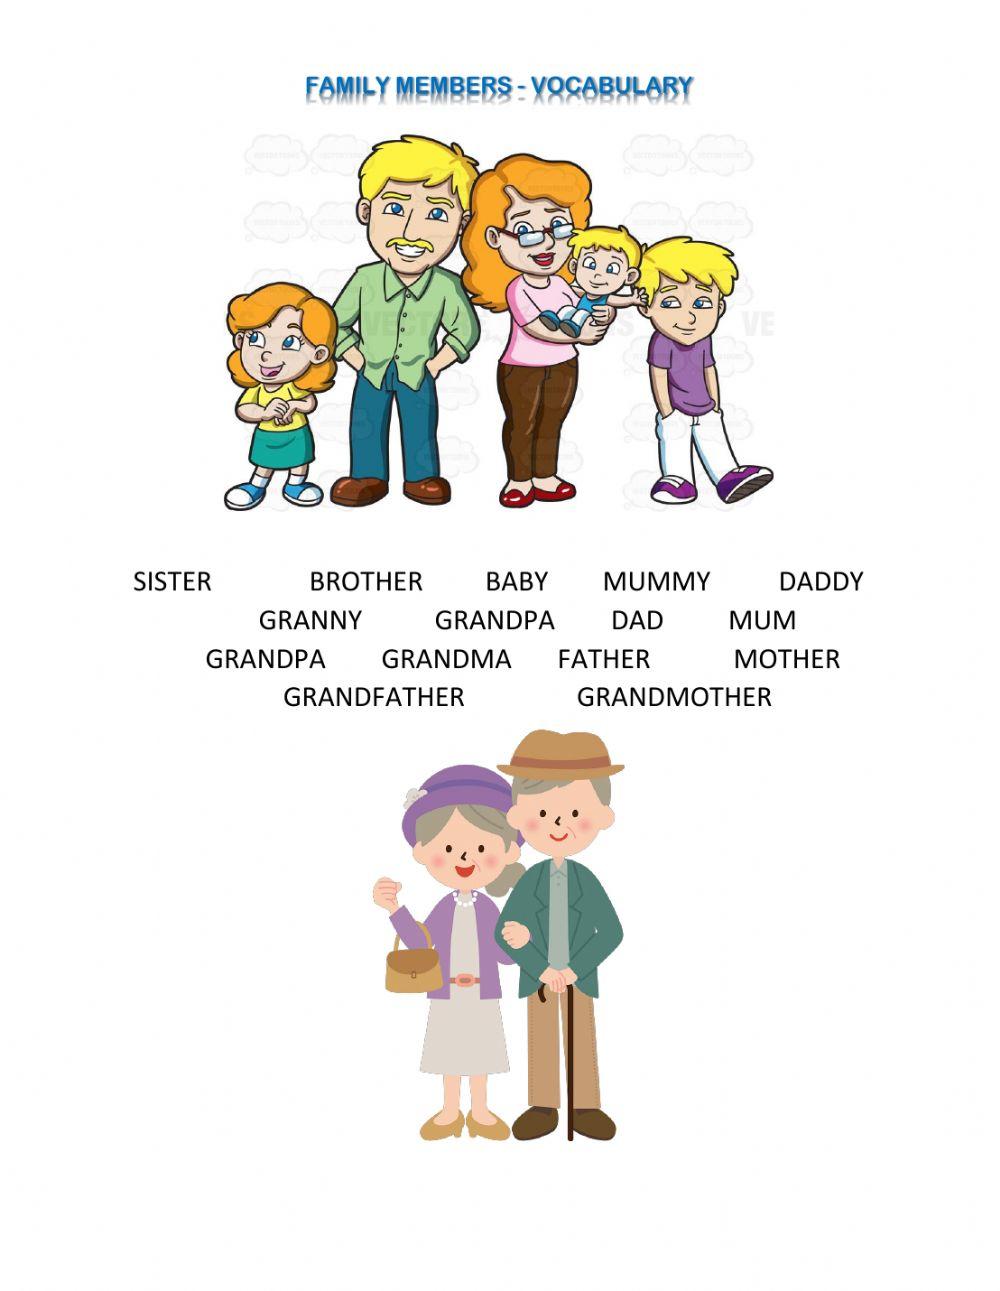 Family members - vocabulary